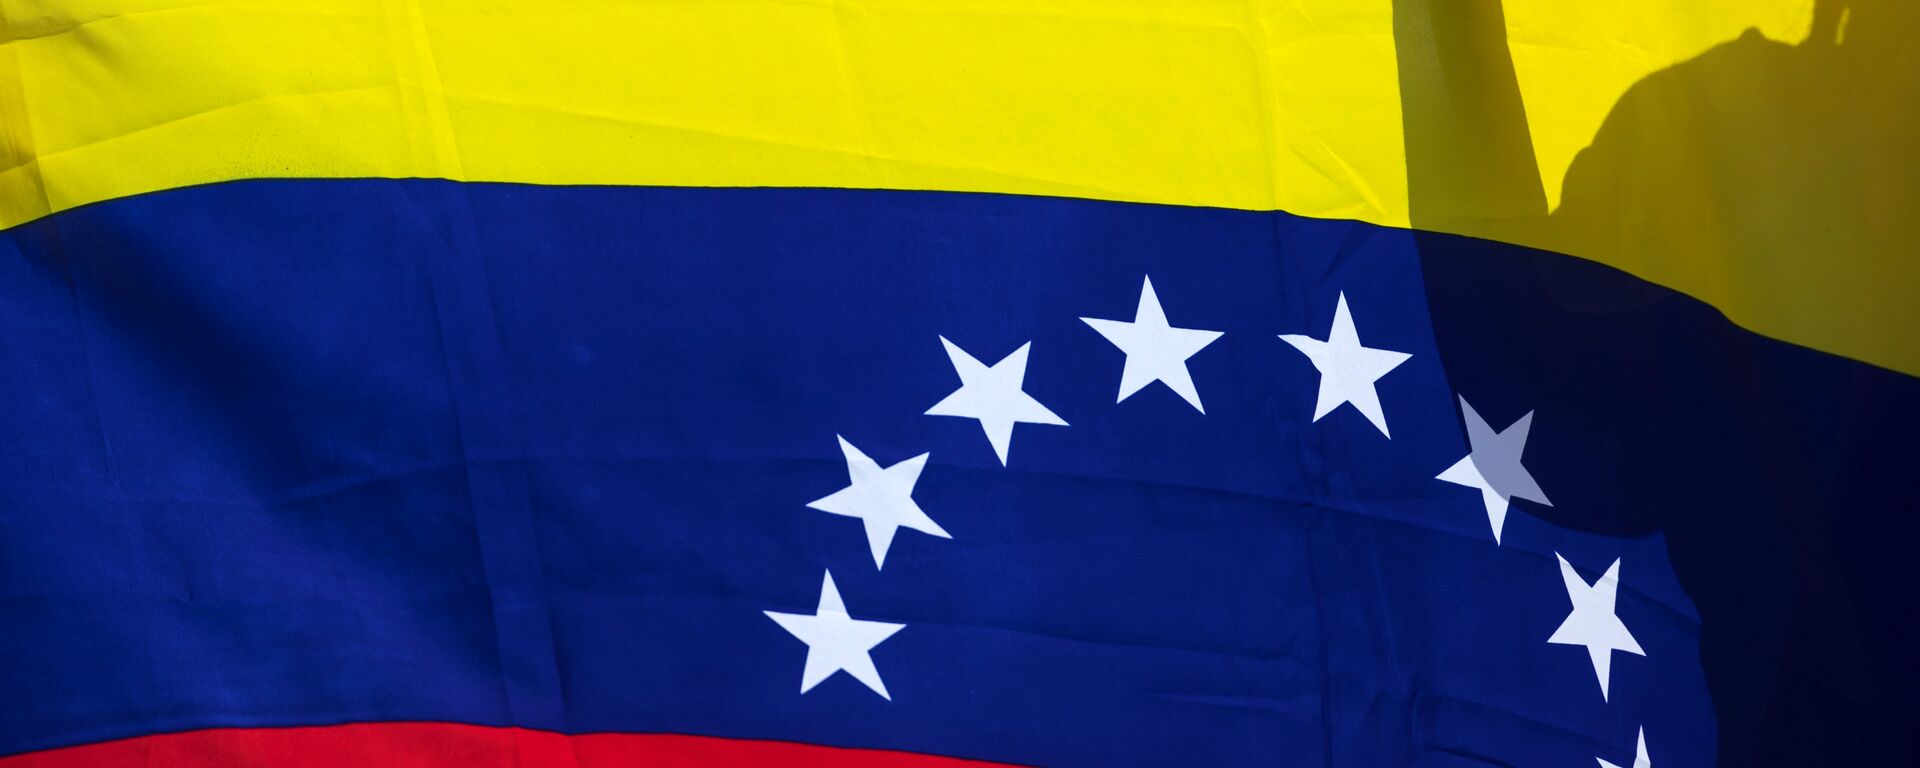 Bandera de Venezuela - Sputnik Mundo, 1920, 20.08.2021